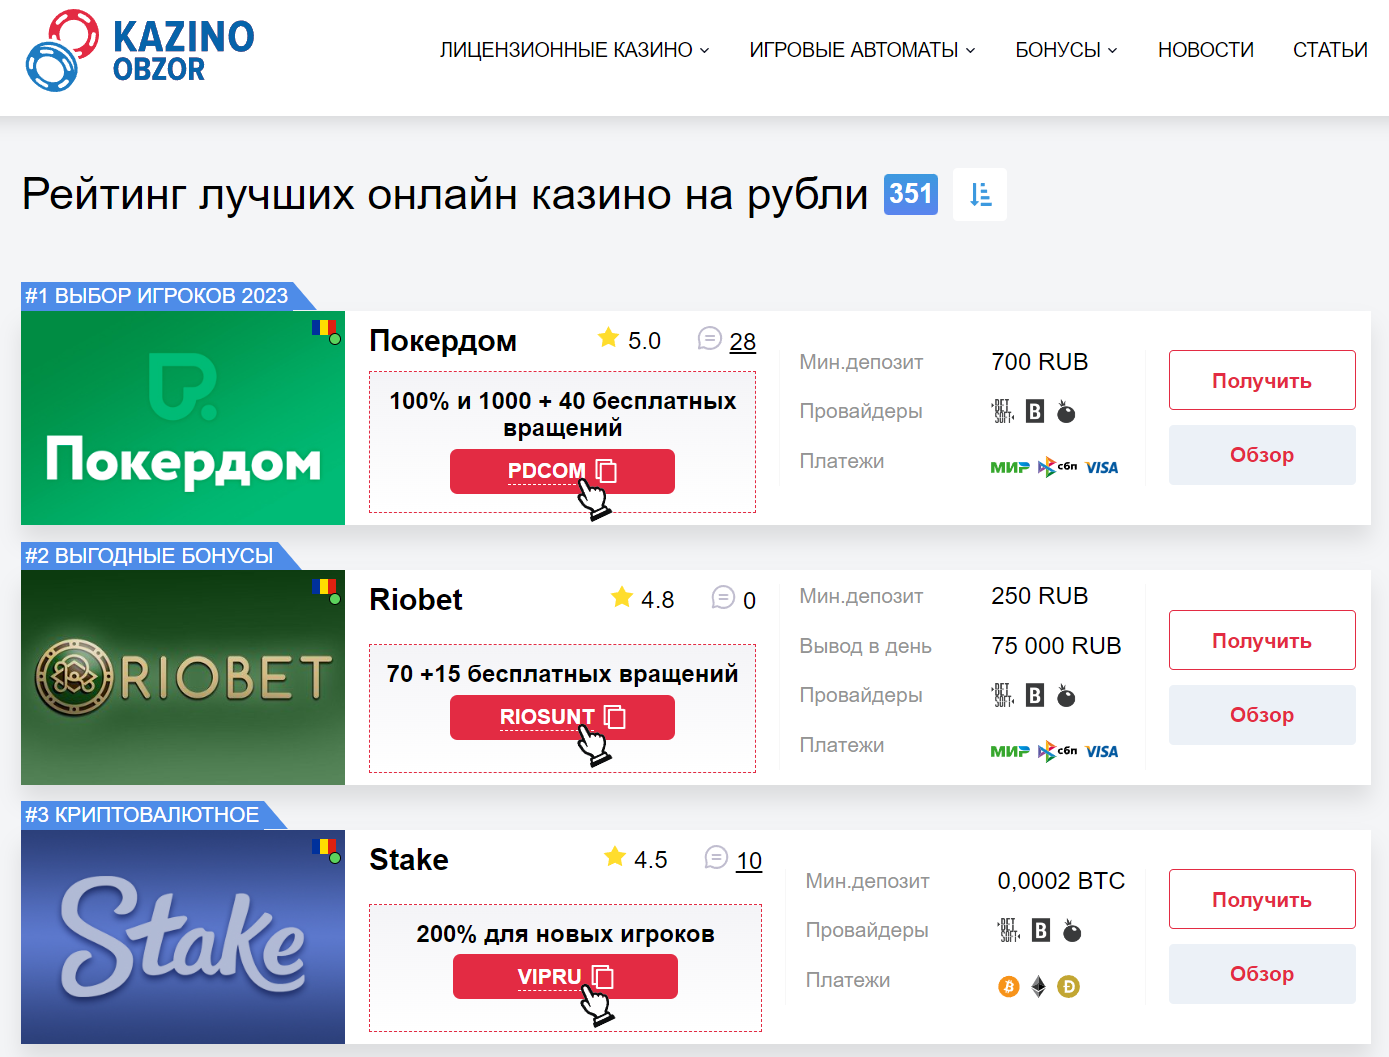 Full version of Android Slots game apk Почему онлайн казино на рубли популярны? for tablet and phone.